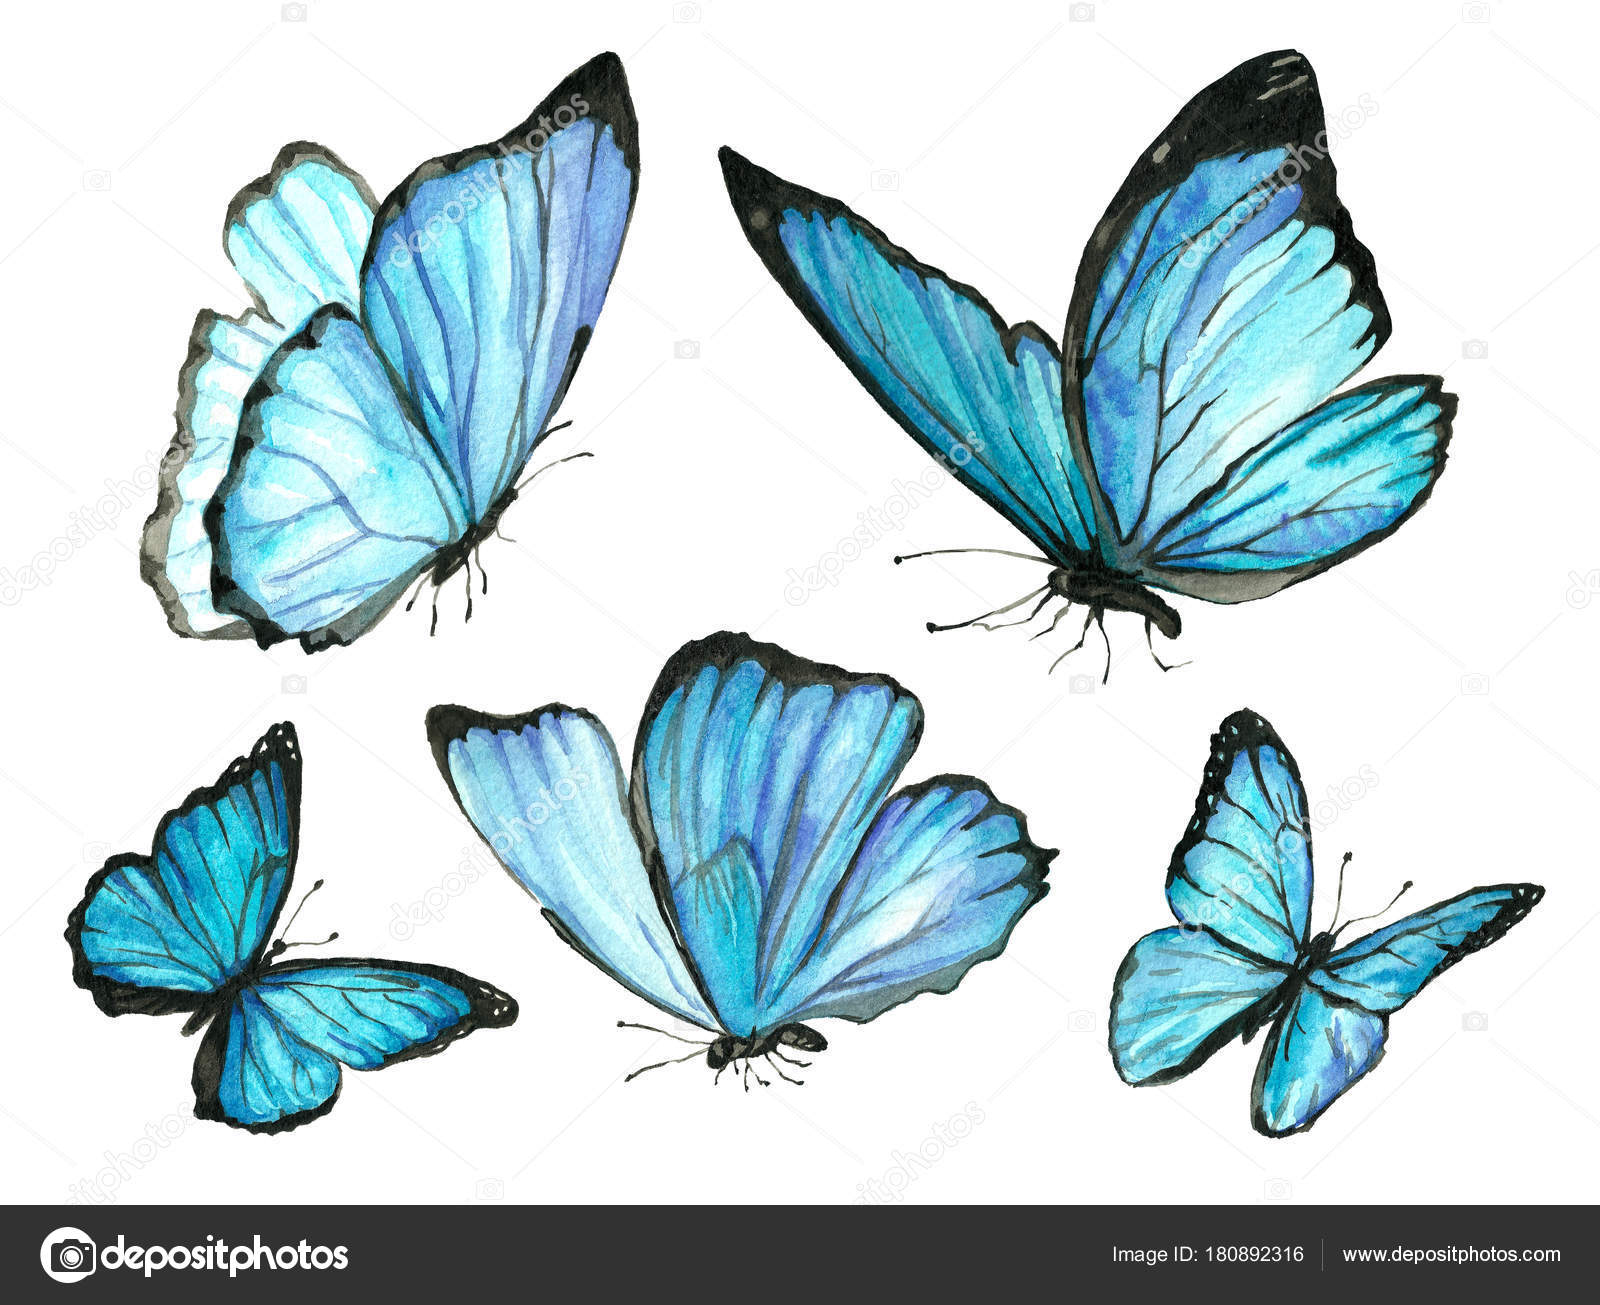 https://st3.depositphotos.com/15959306/18089/i/1600/depositphotos_180892316-stock-illustration-collection-watercolor-of-flying-butterflies.jpg